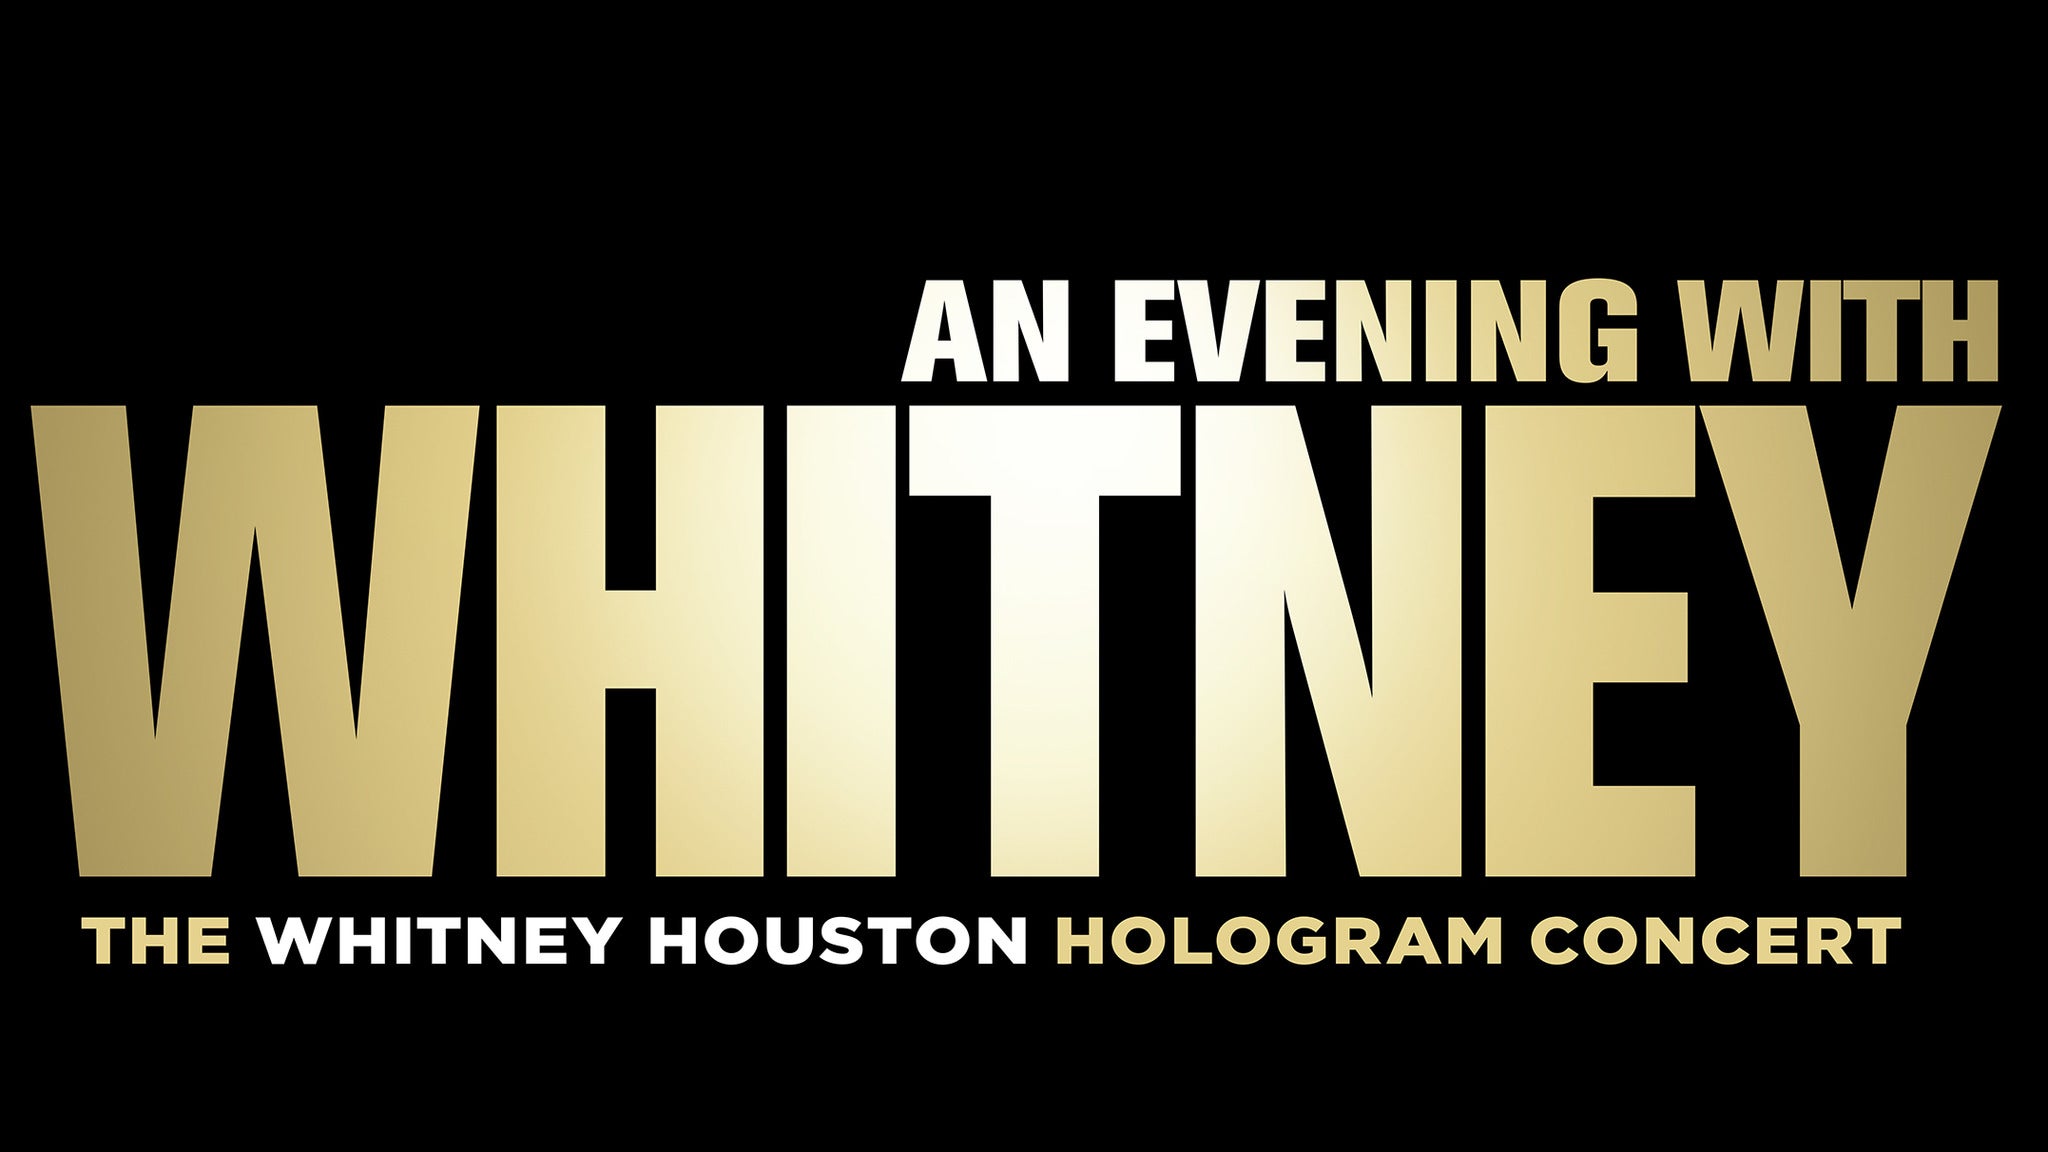 An Evening With Whitney: The Whitney Houston Hologram Concert (Las Vegas) presale information on freepresalepasswords.com